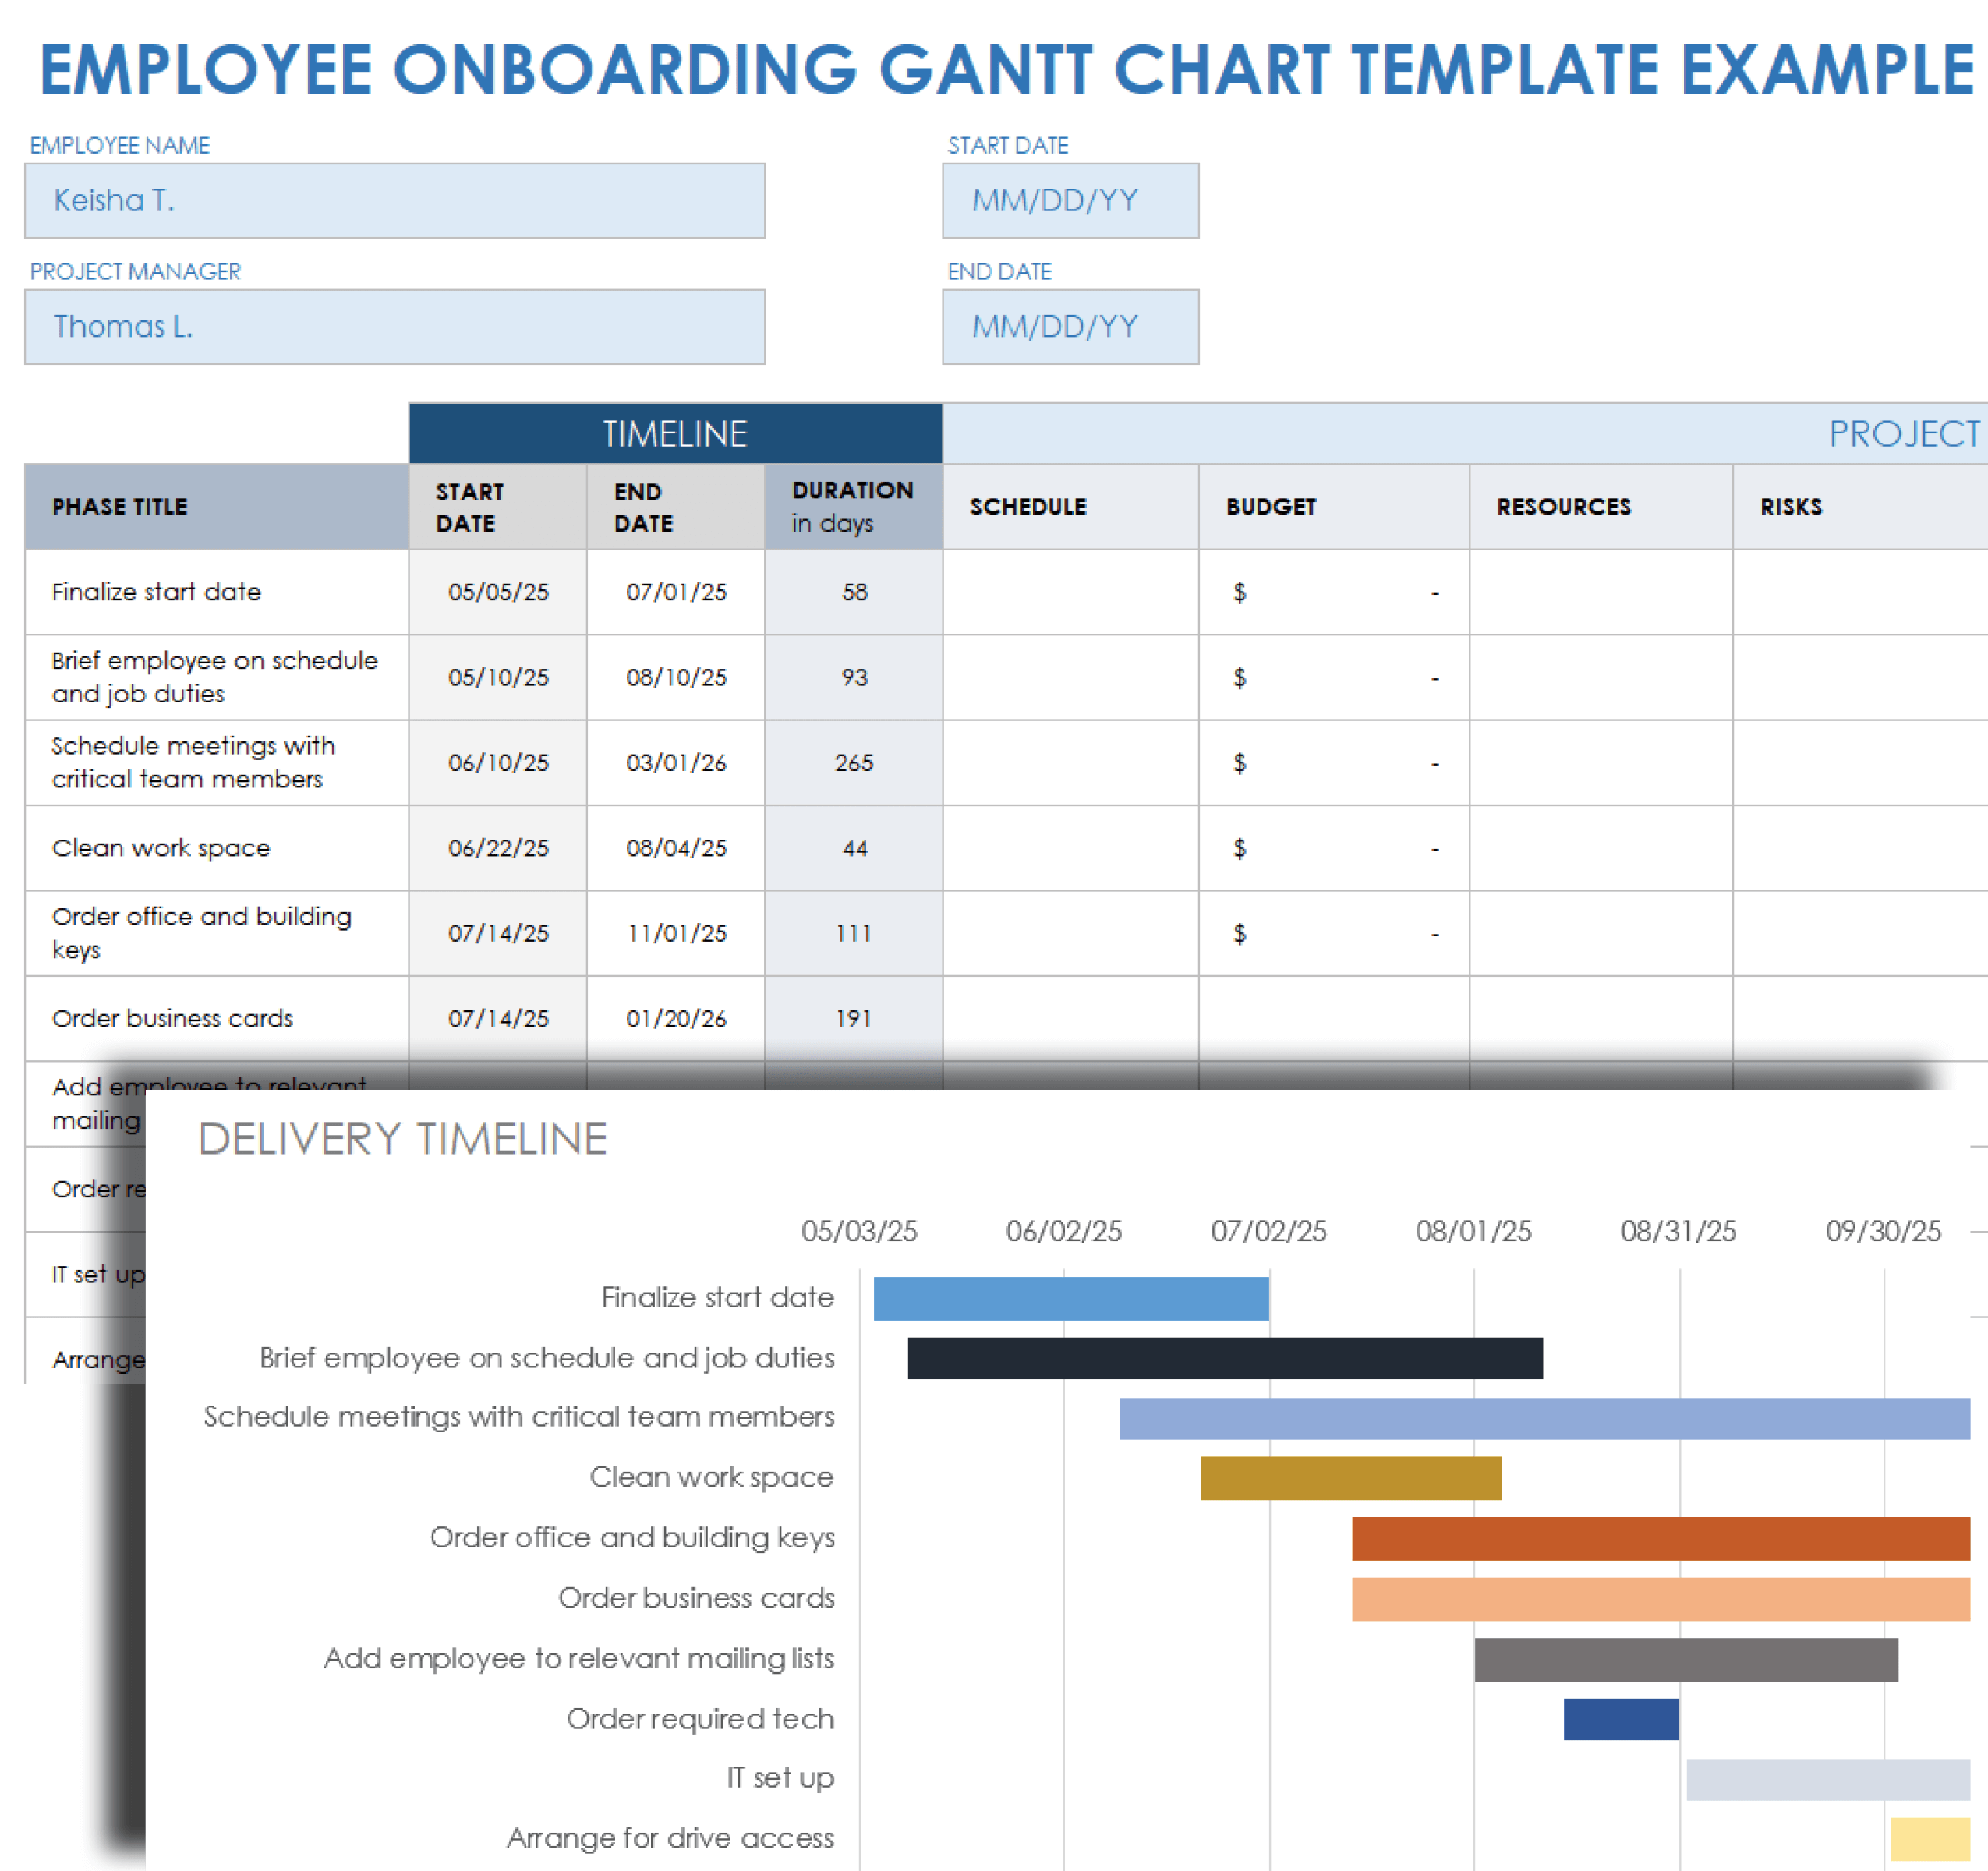 Employee Onboarding Gantt Chart Template Example